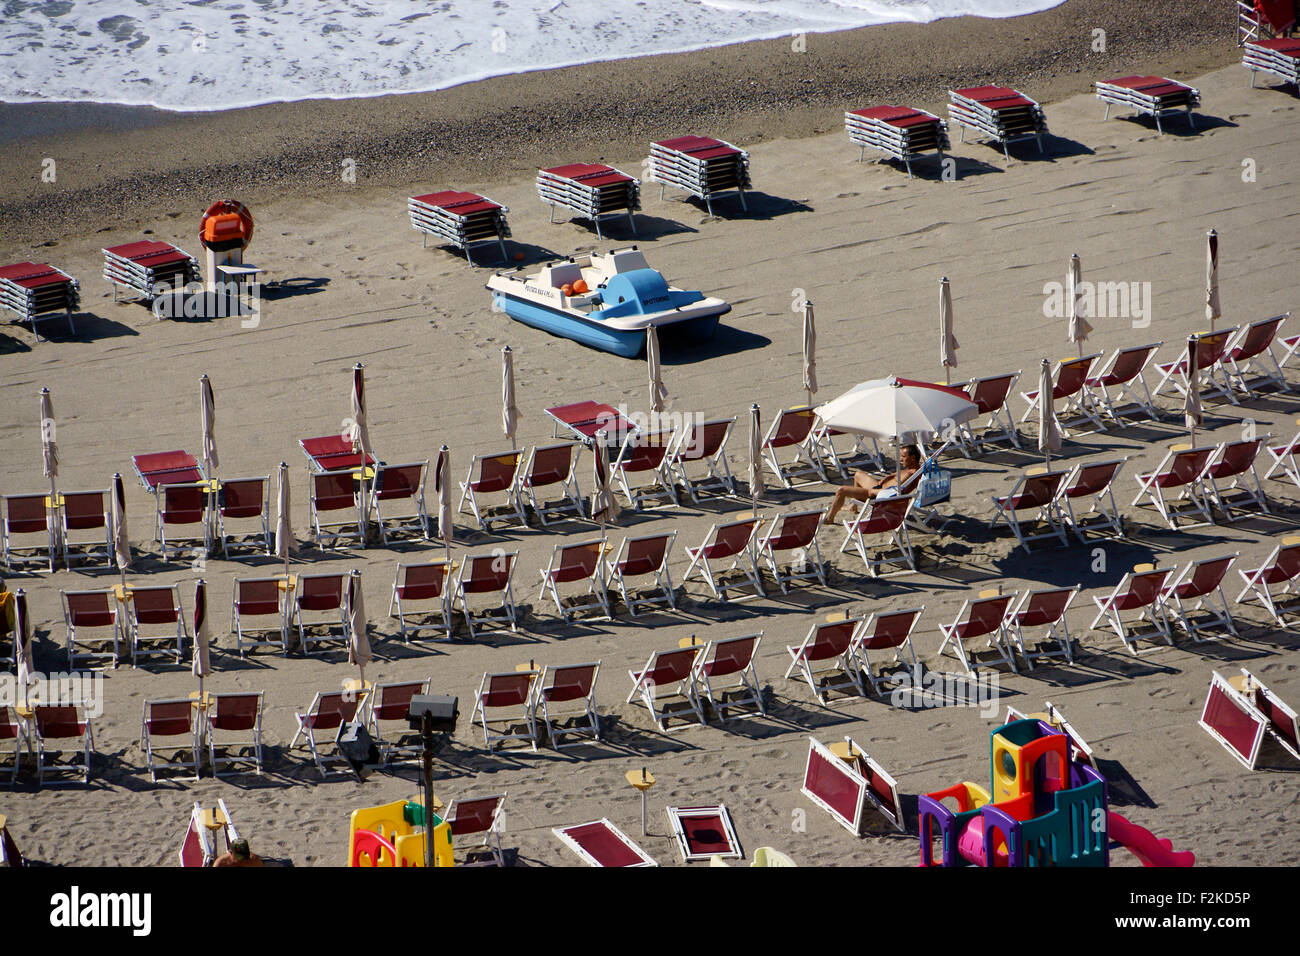 Rows of lawn chairs on beach, Riviera di Ponente at Spotorno, Liguria, Italy Stock Photo